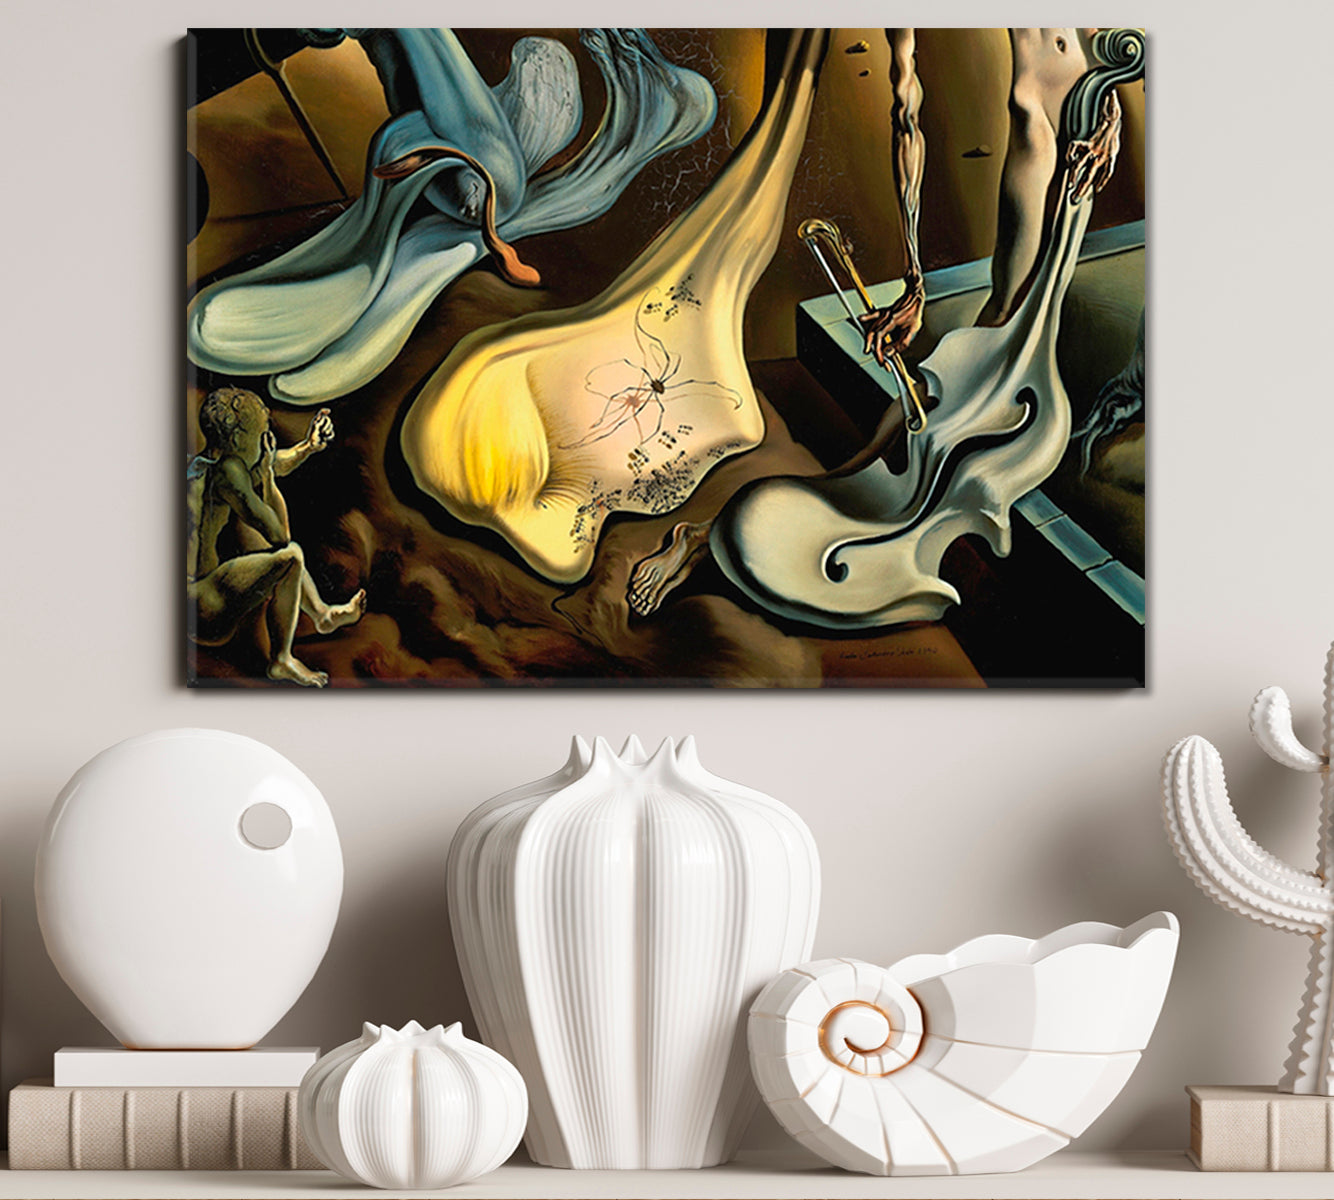 Inspirid by Salvador Dali Surreal Abstract Modern Artwork Surreal Fantasy Large Art Print Décor Artesty   